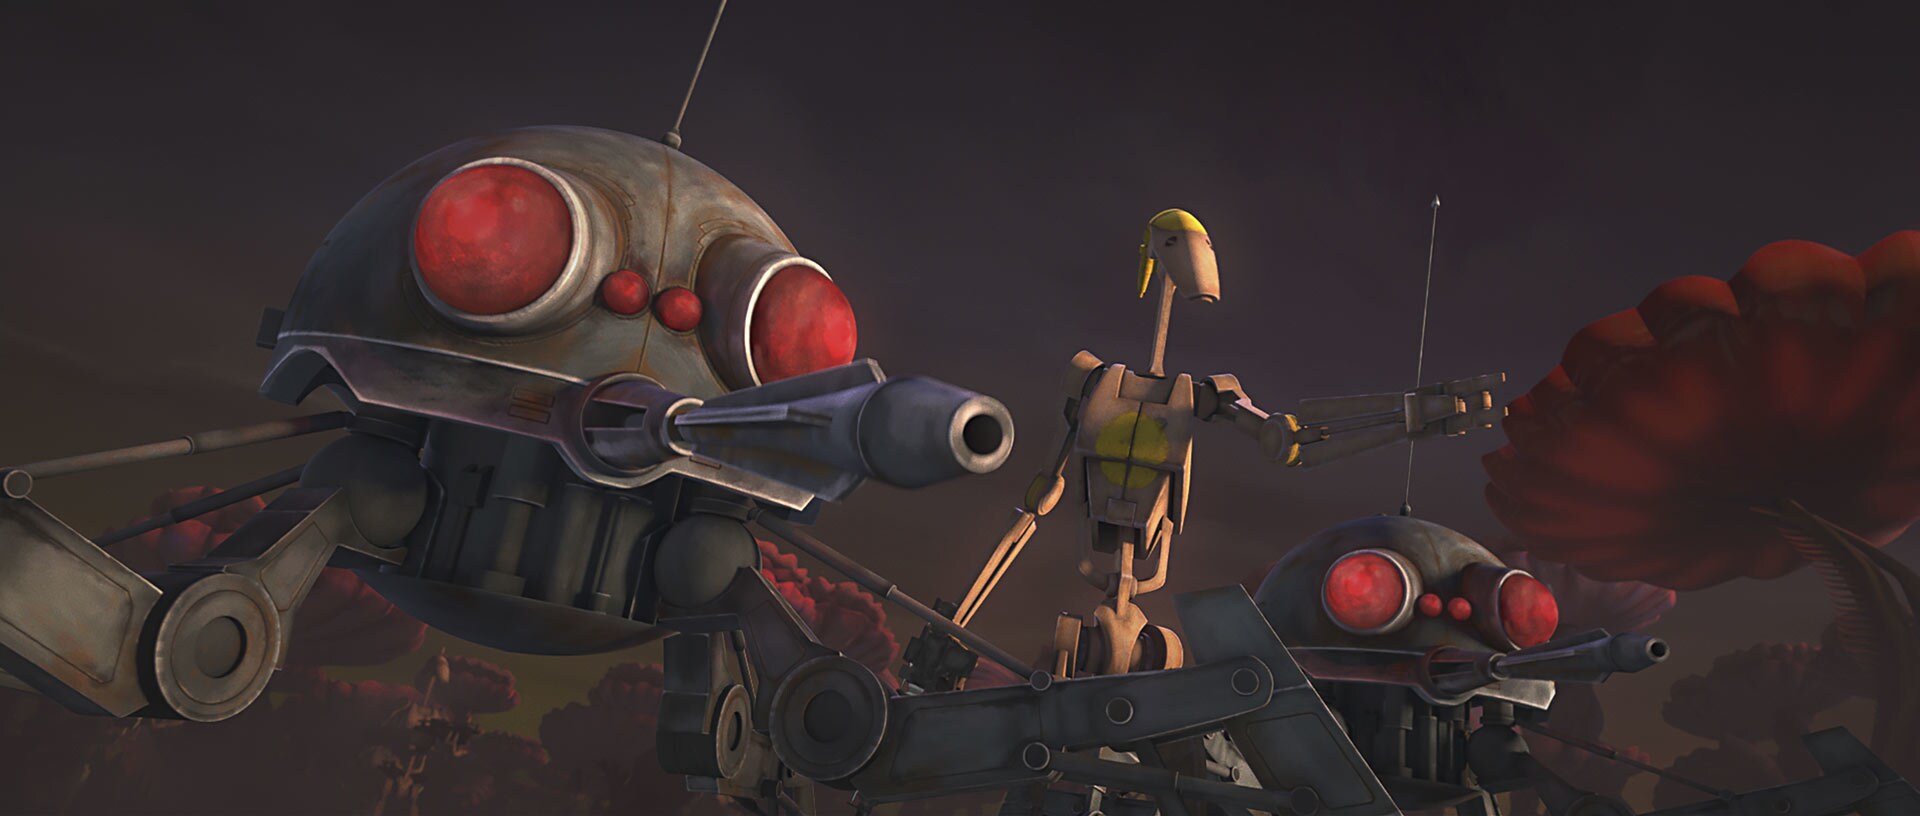 En route to the Separatist cyber center, battle droids spot the clones' gunship and blast it out ...